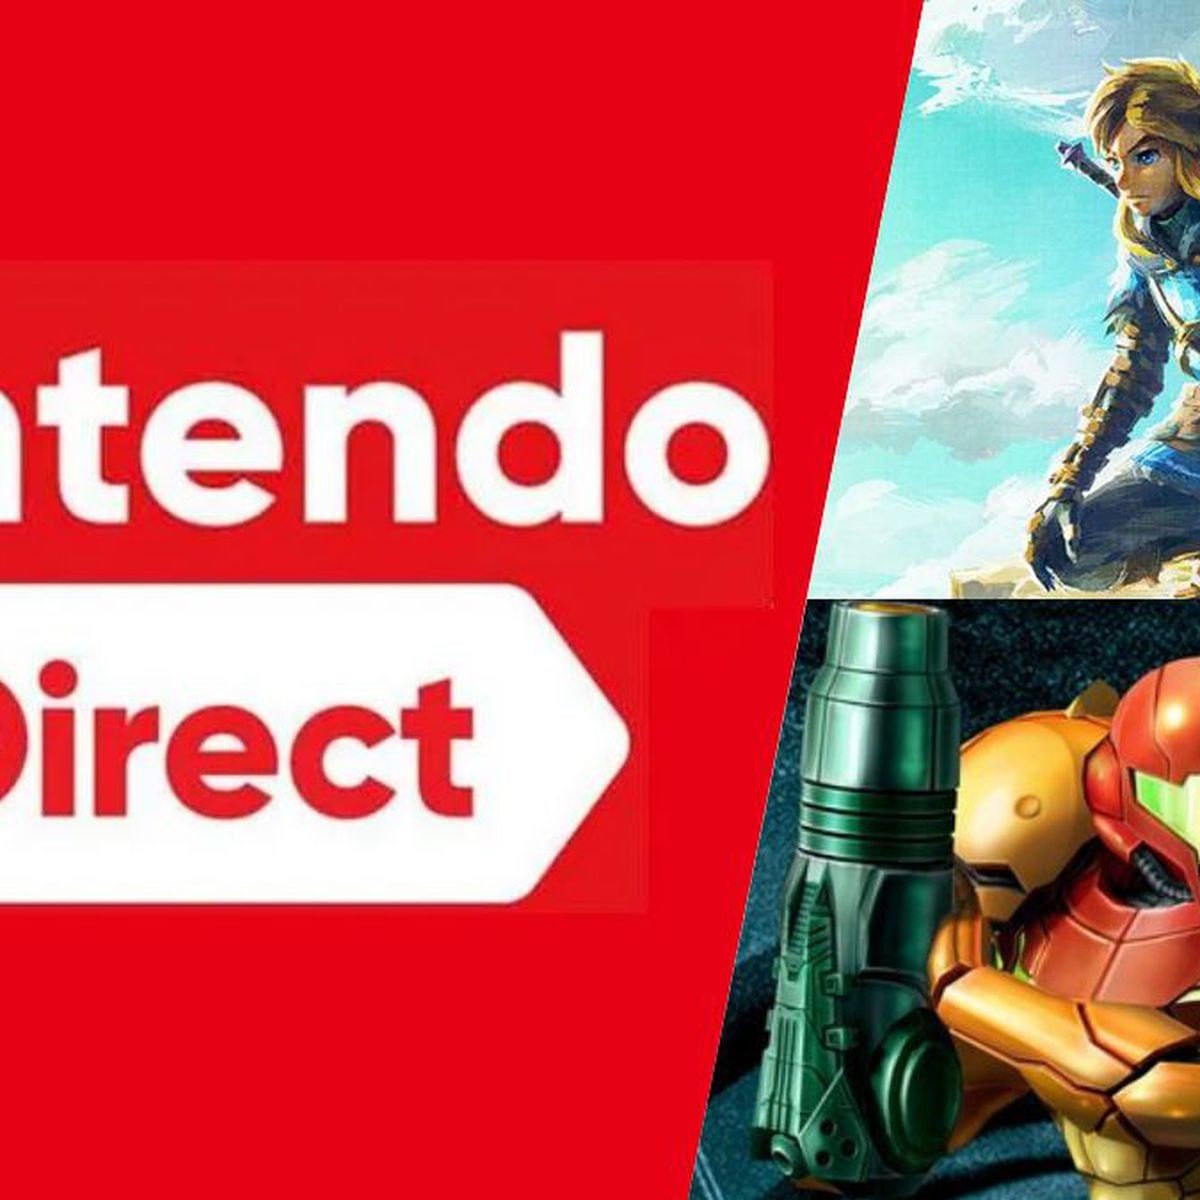 Baten Kaitos 1 & 2 HD Remaster announced, Nintendo Switch News